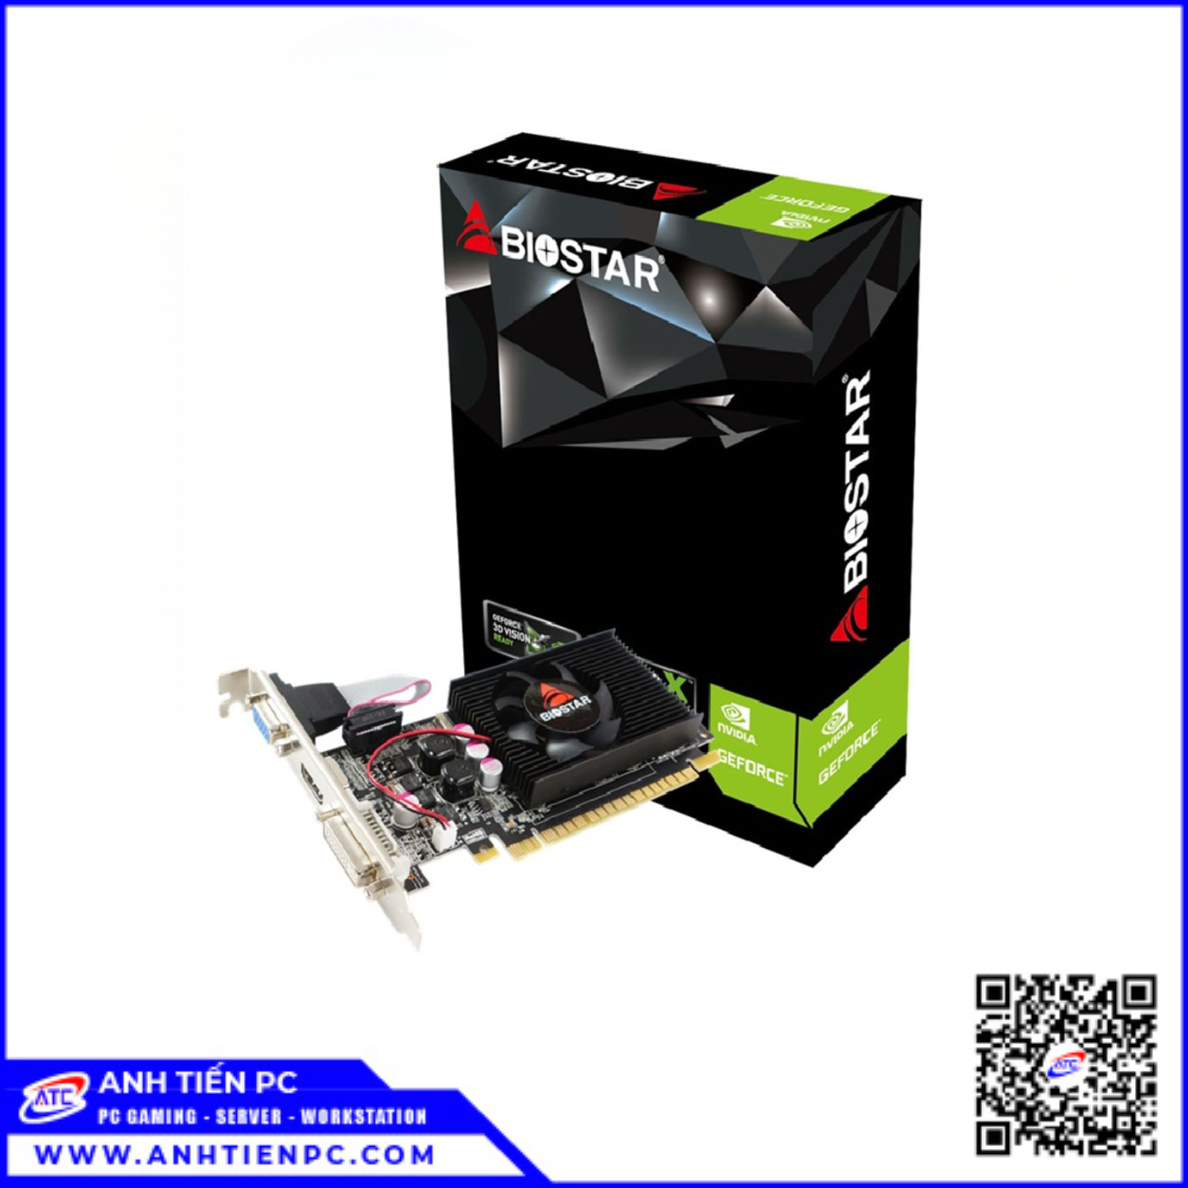 VGA Biostar G210 (1GB, DDR3, 1Fan, 64 Bit)